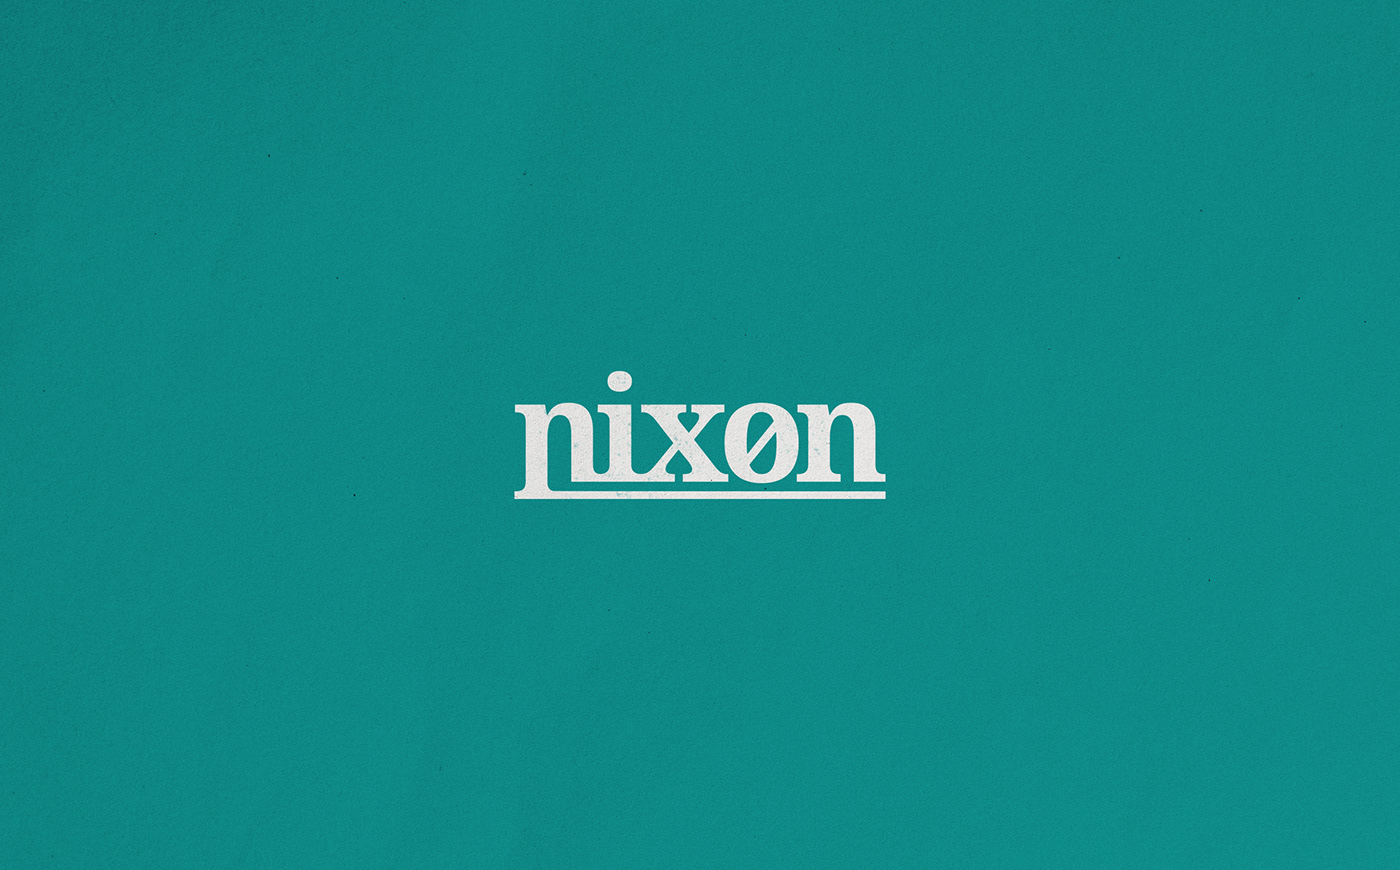 Nixon brand logo branding  Logo Design brand identity visual identity Nixon Clothing